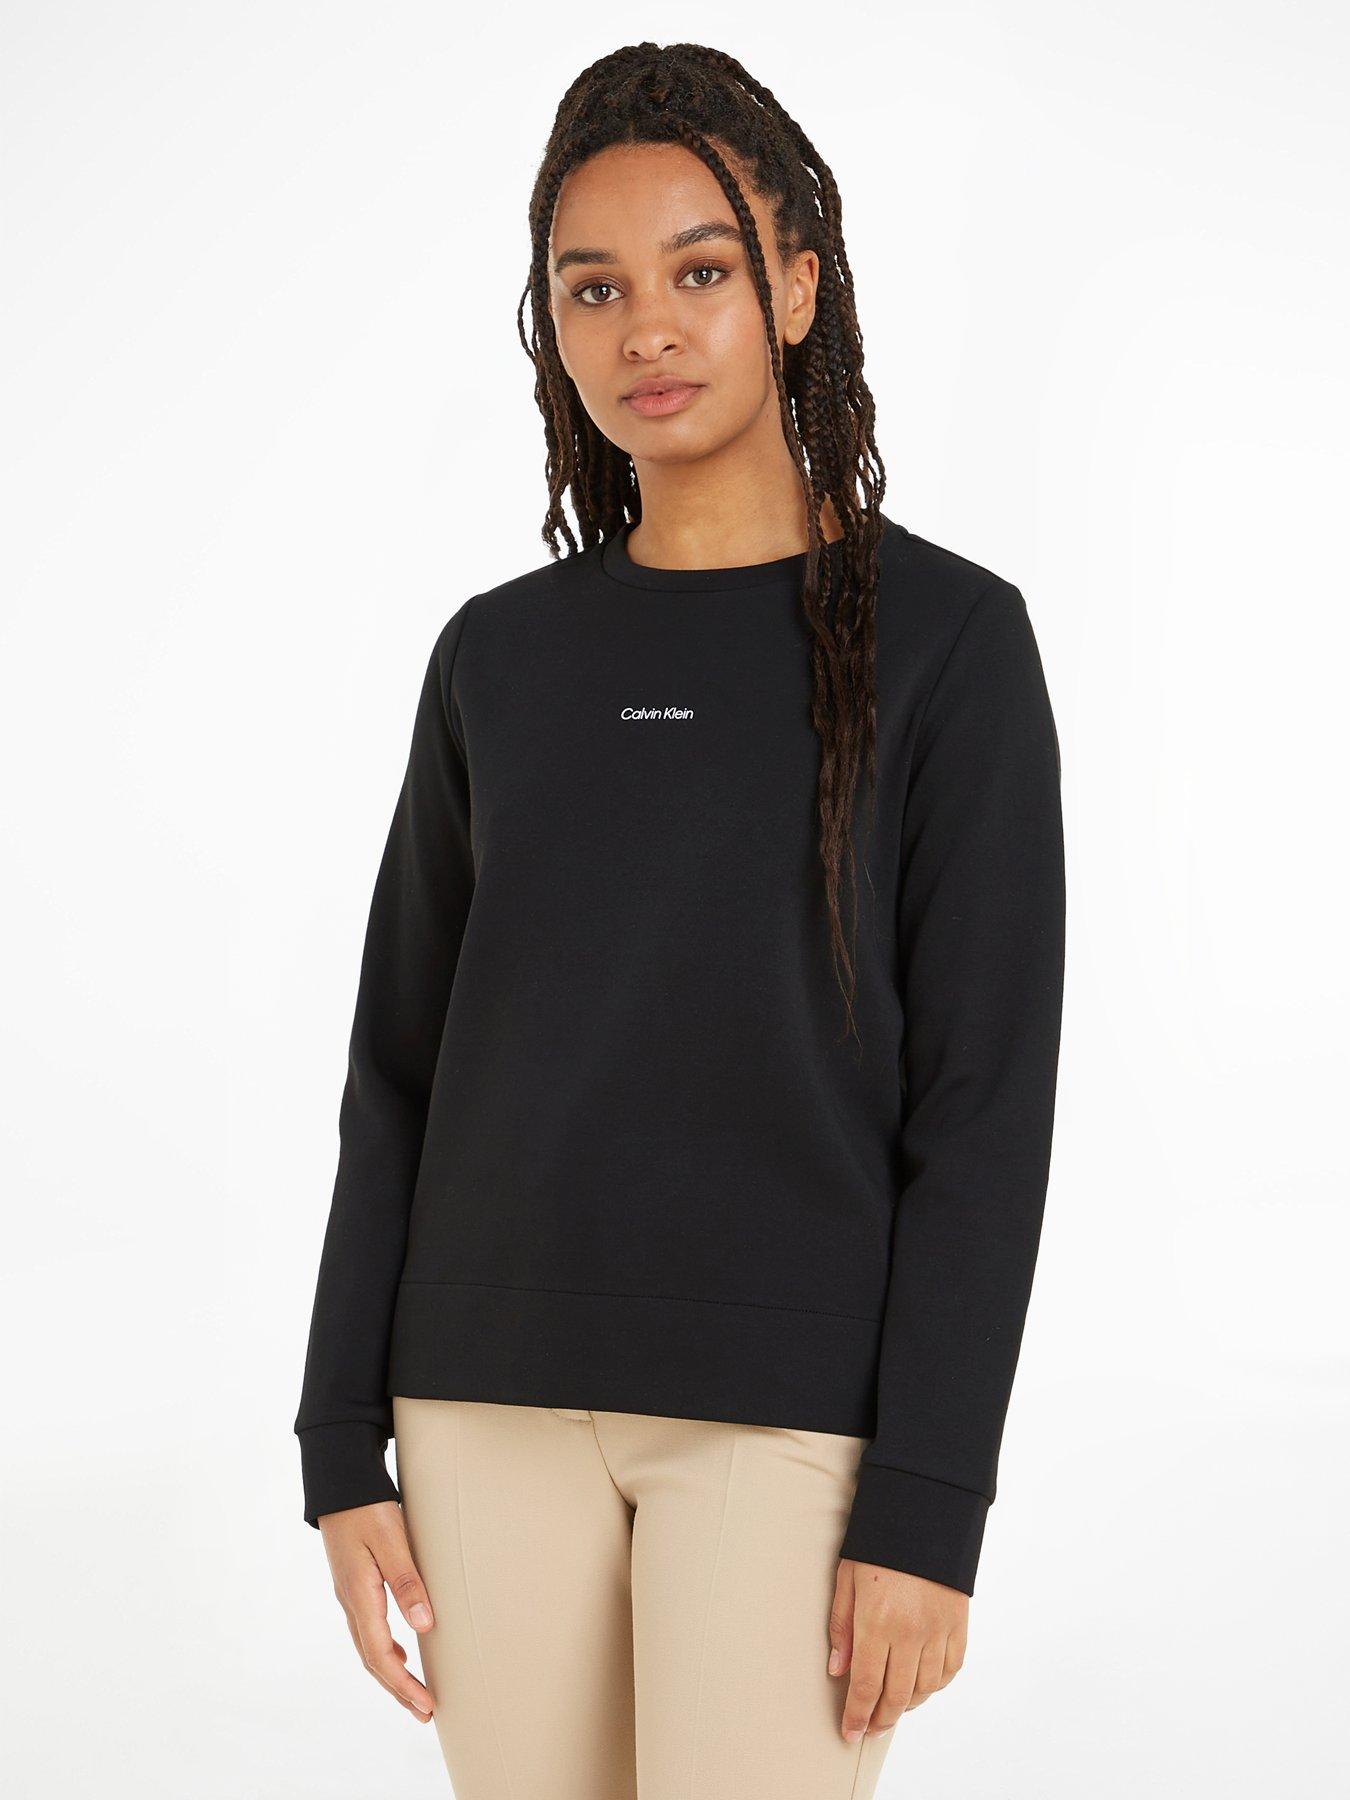 Calvin Klein Women's Shrunken Institutional Sweatshirt Dress